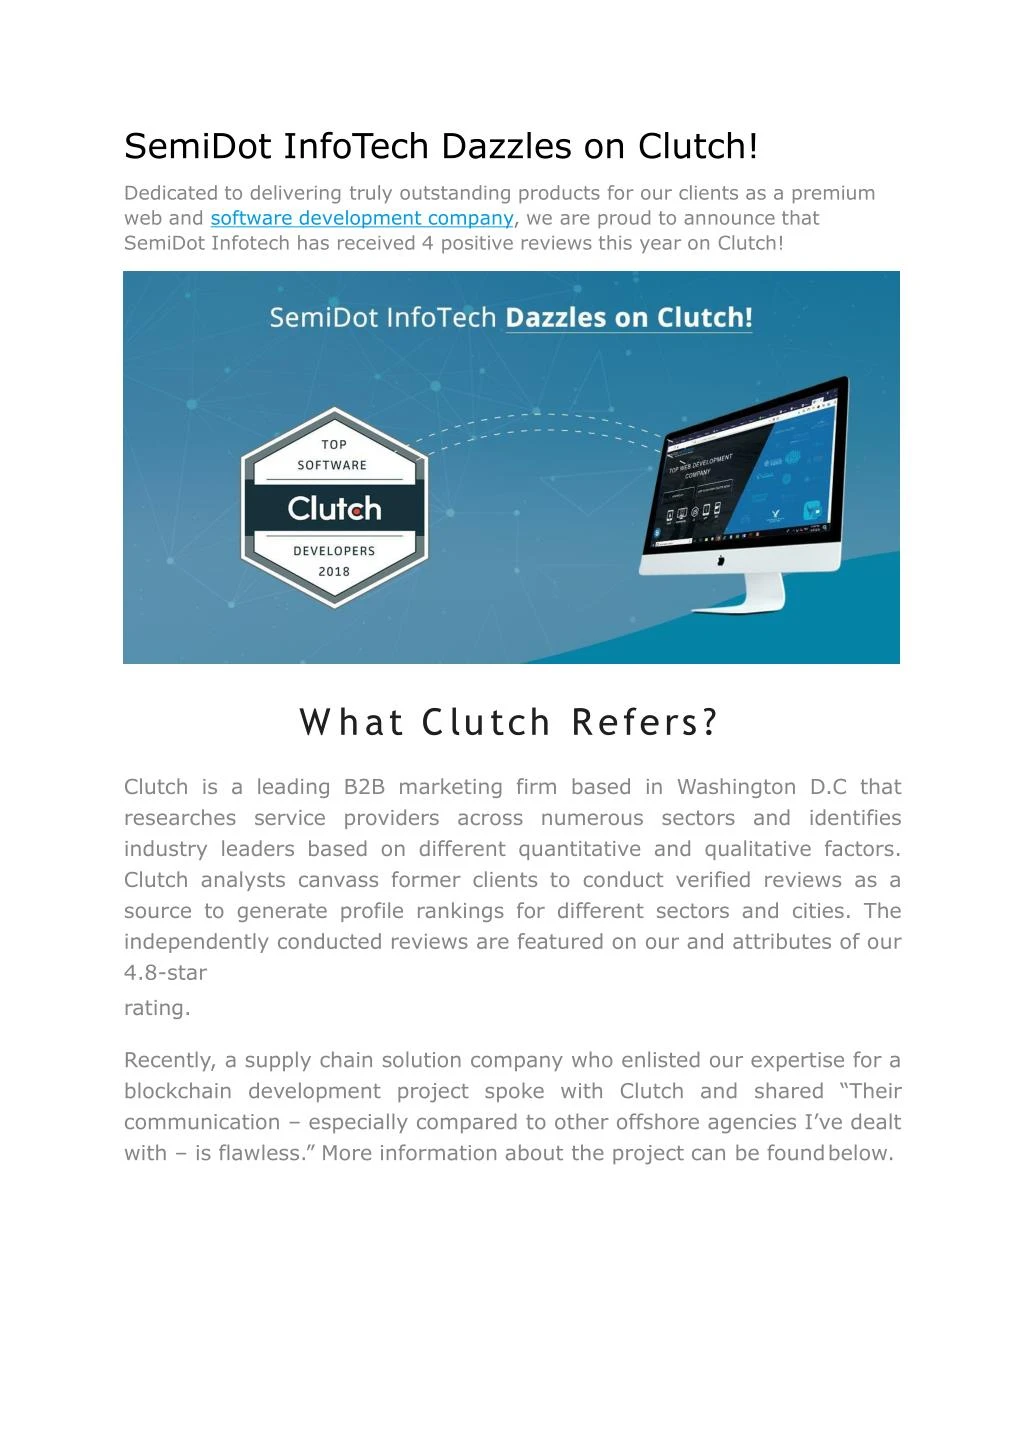 semidot infotech dazzles on clutch dedicated